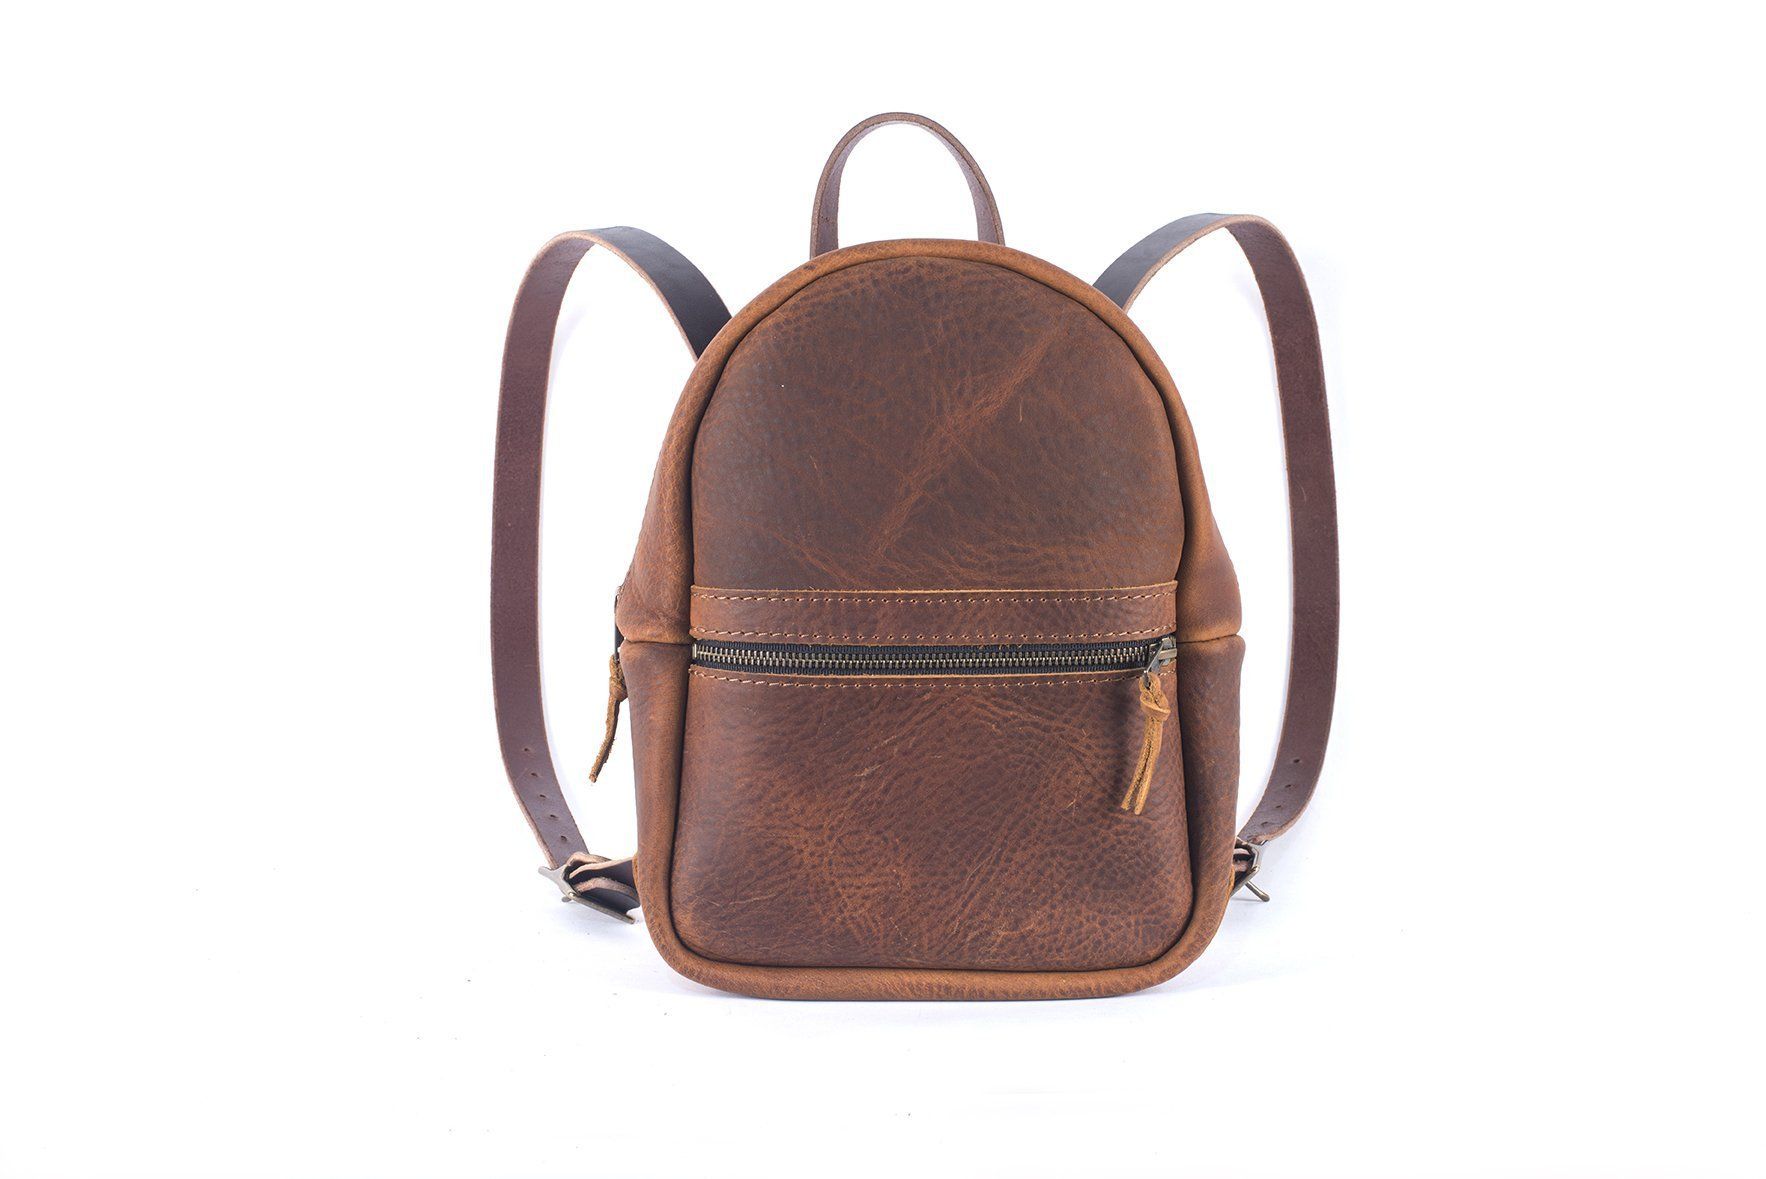 Buy Business Slim Leather Backpack for USD 224.99 | Samsonite US